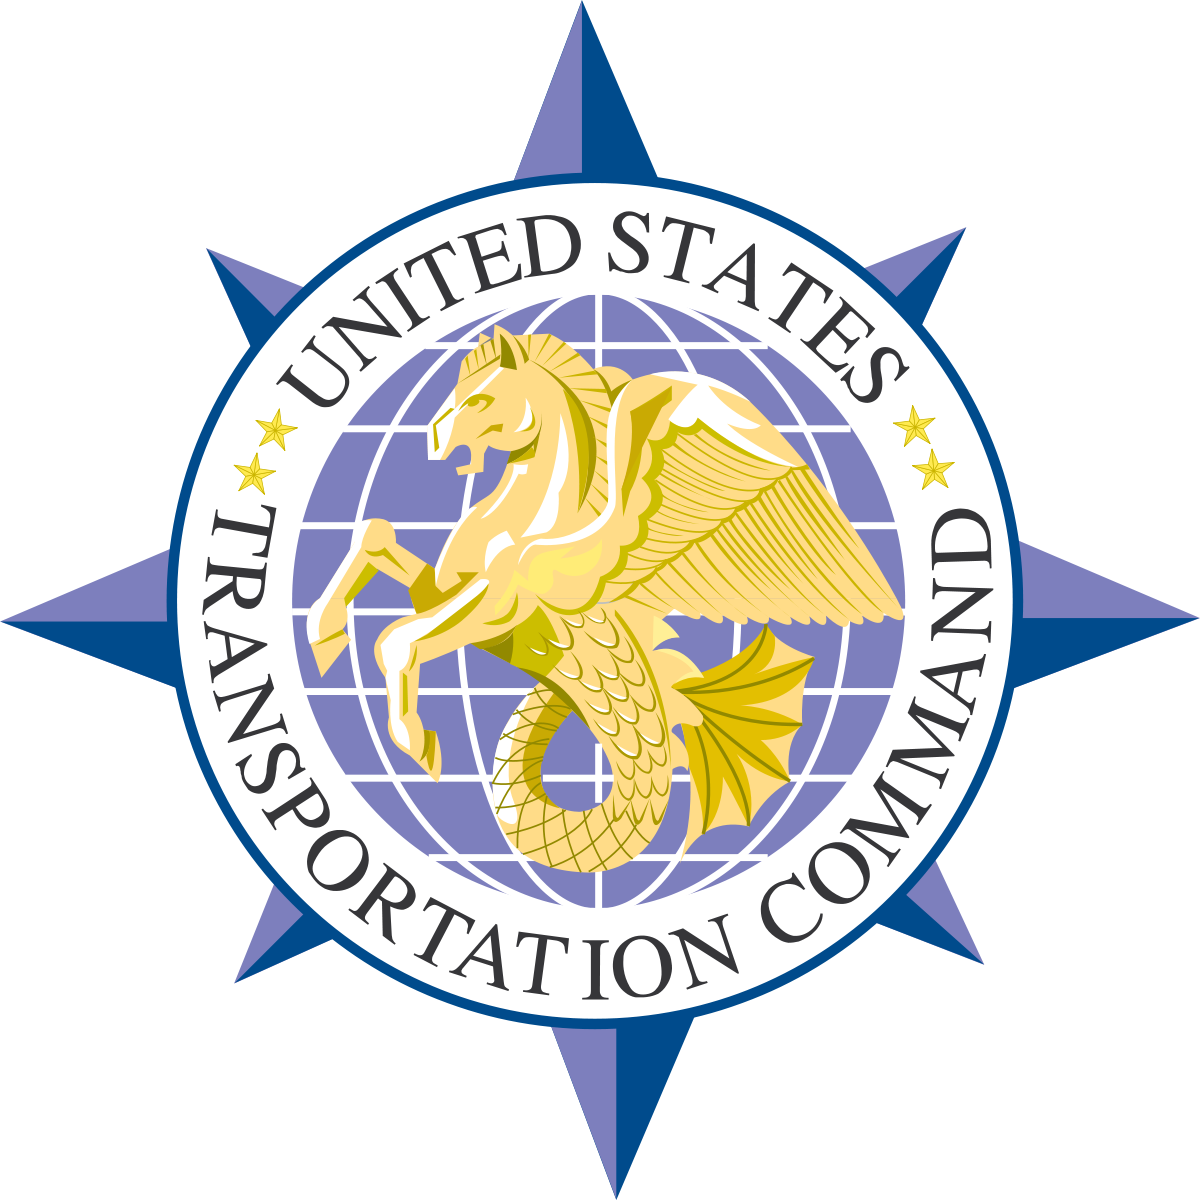 U.S. Transportation Command logo